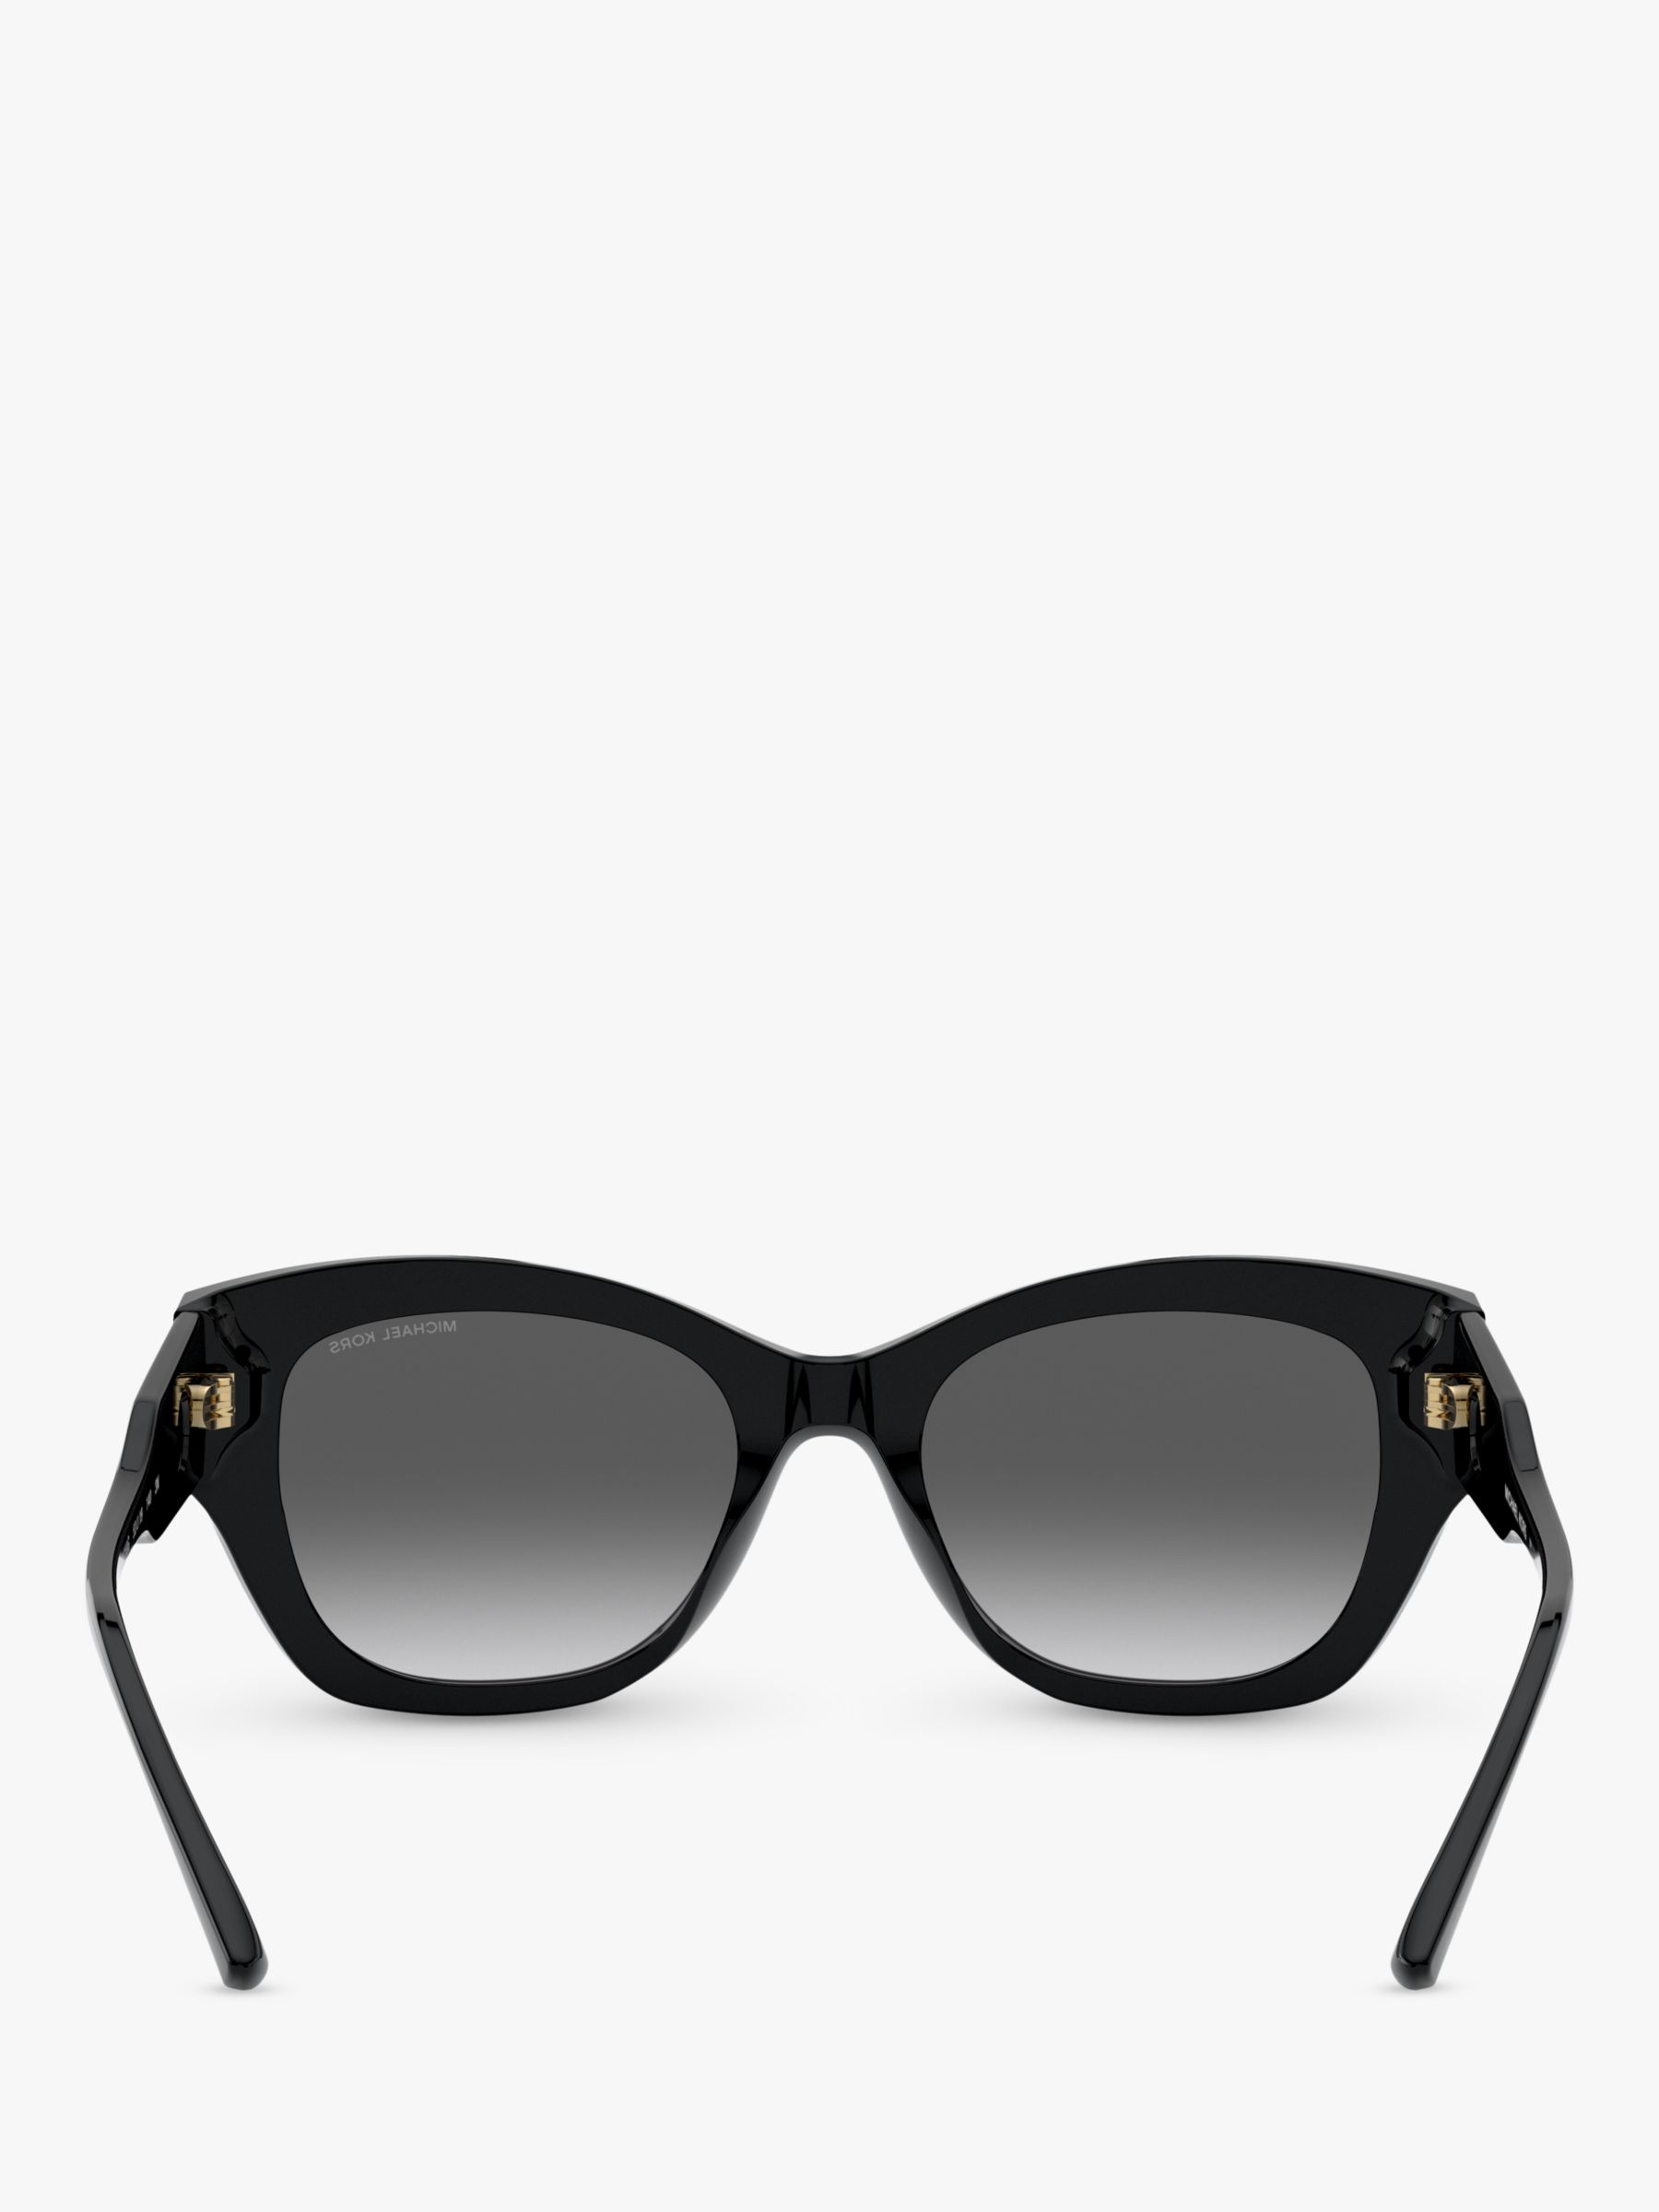 Michael Kors Mk2119 Women S Palermo Square Sunglasses Black Grey Gradient At John Lewis And Partners